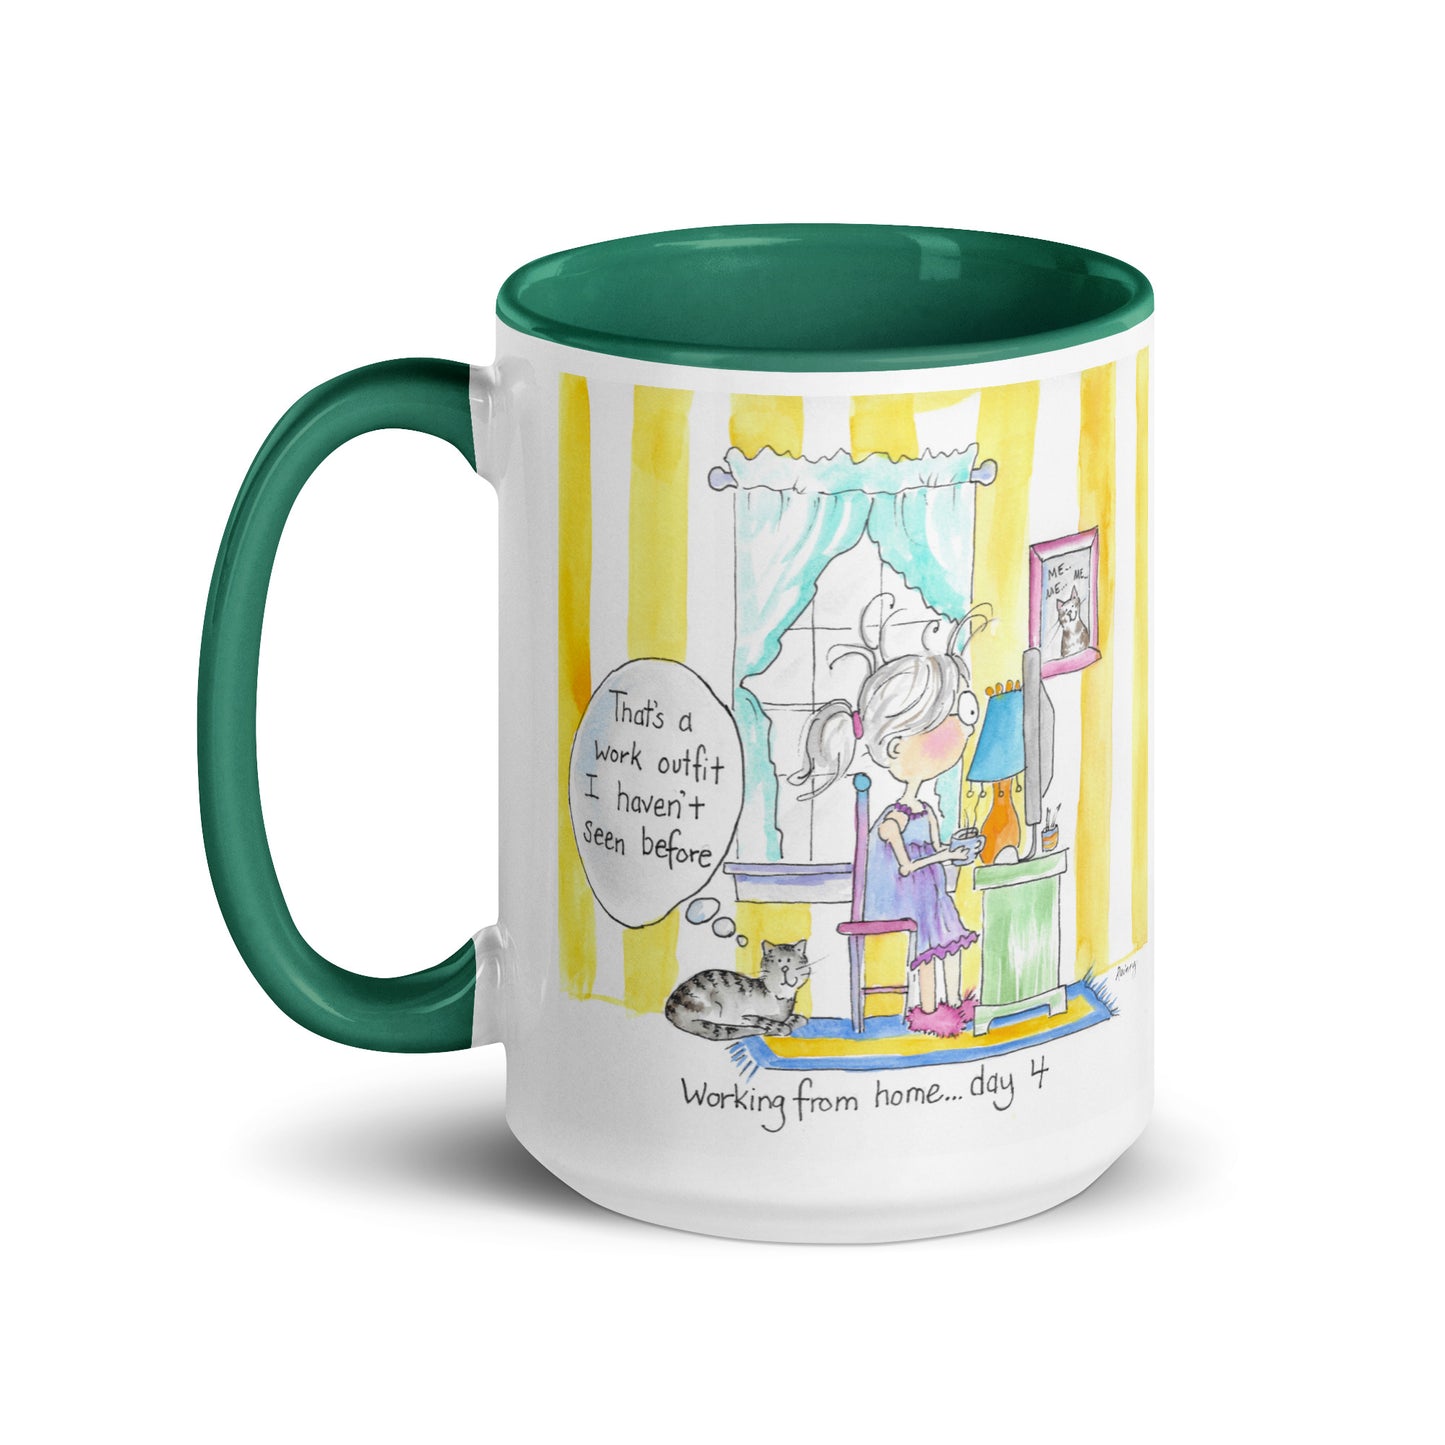 "Working From Home - Day 4" Coffee or Tea Mug / Design by Rainey Dewey